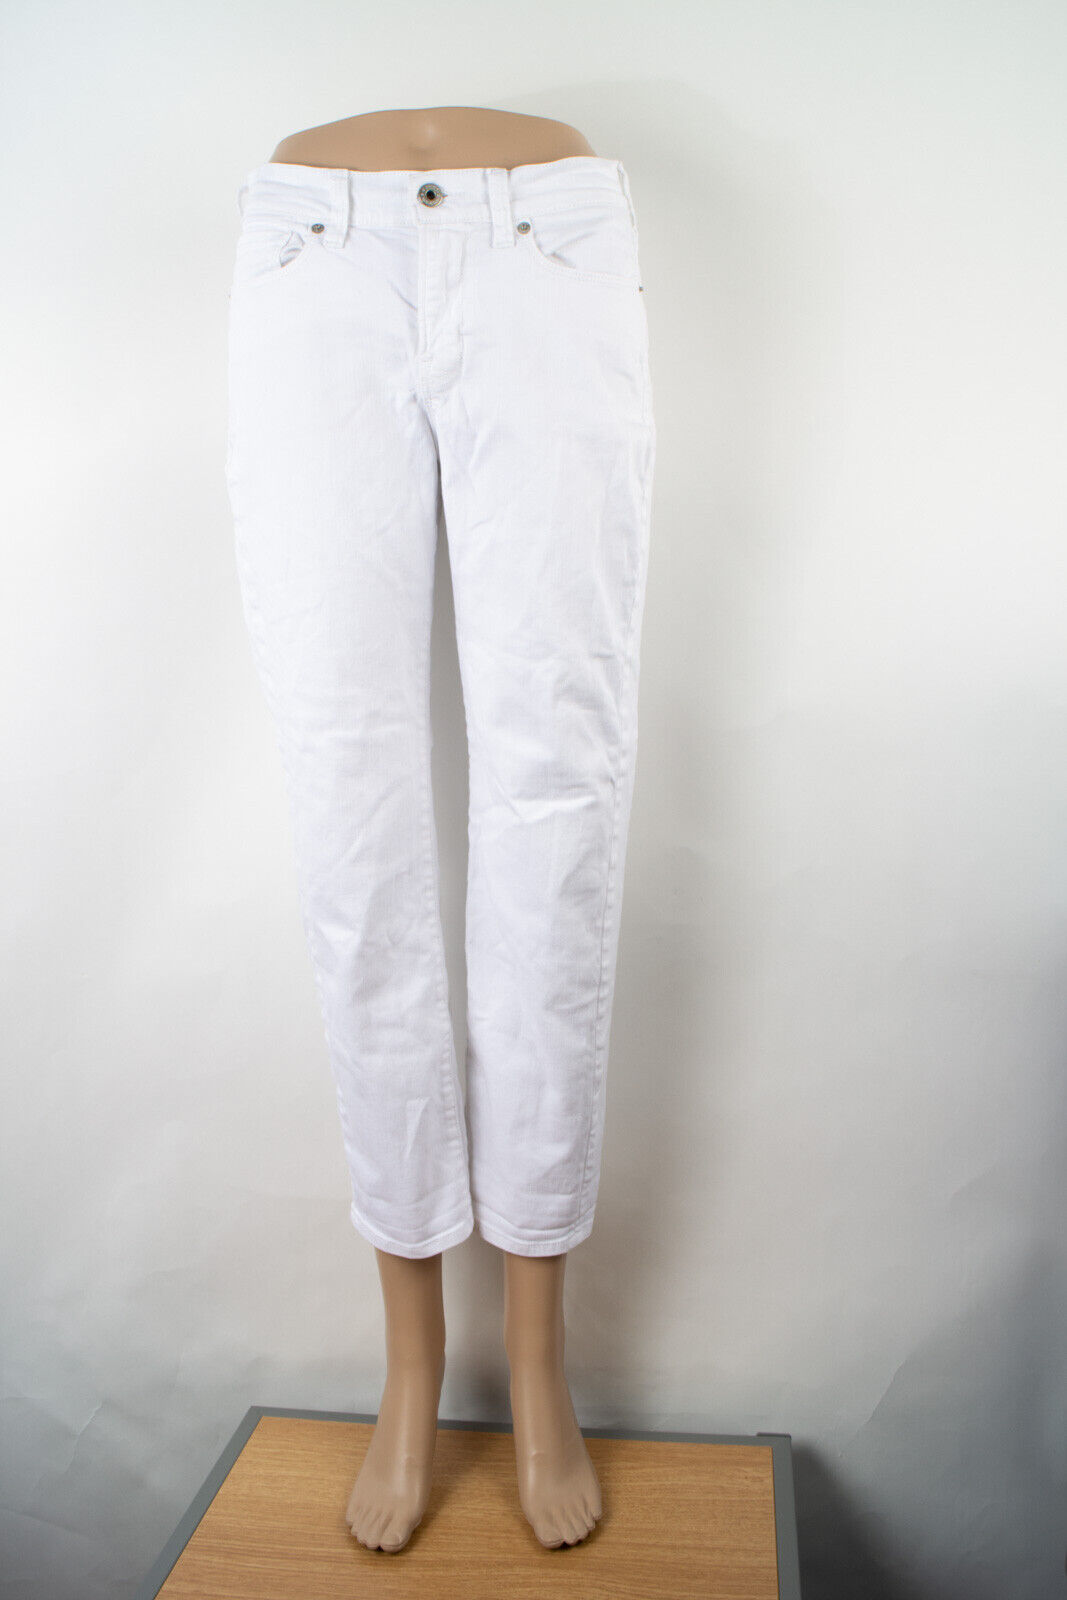 Lucky Brand Brooke Crop 6 (28 X 26) Women's Jeans White Denim Zip Fly | eBay